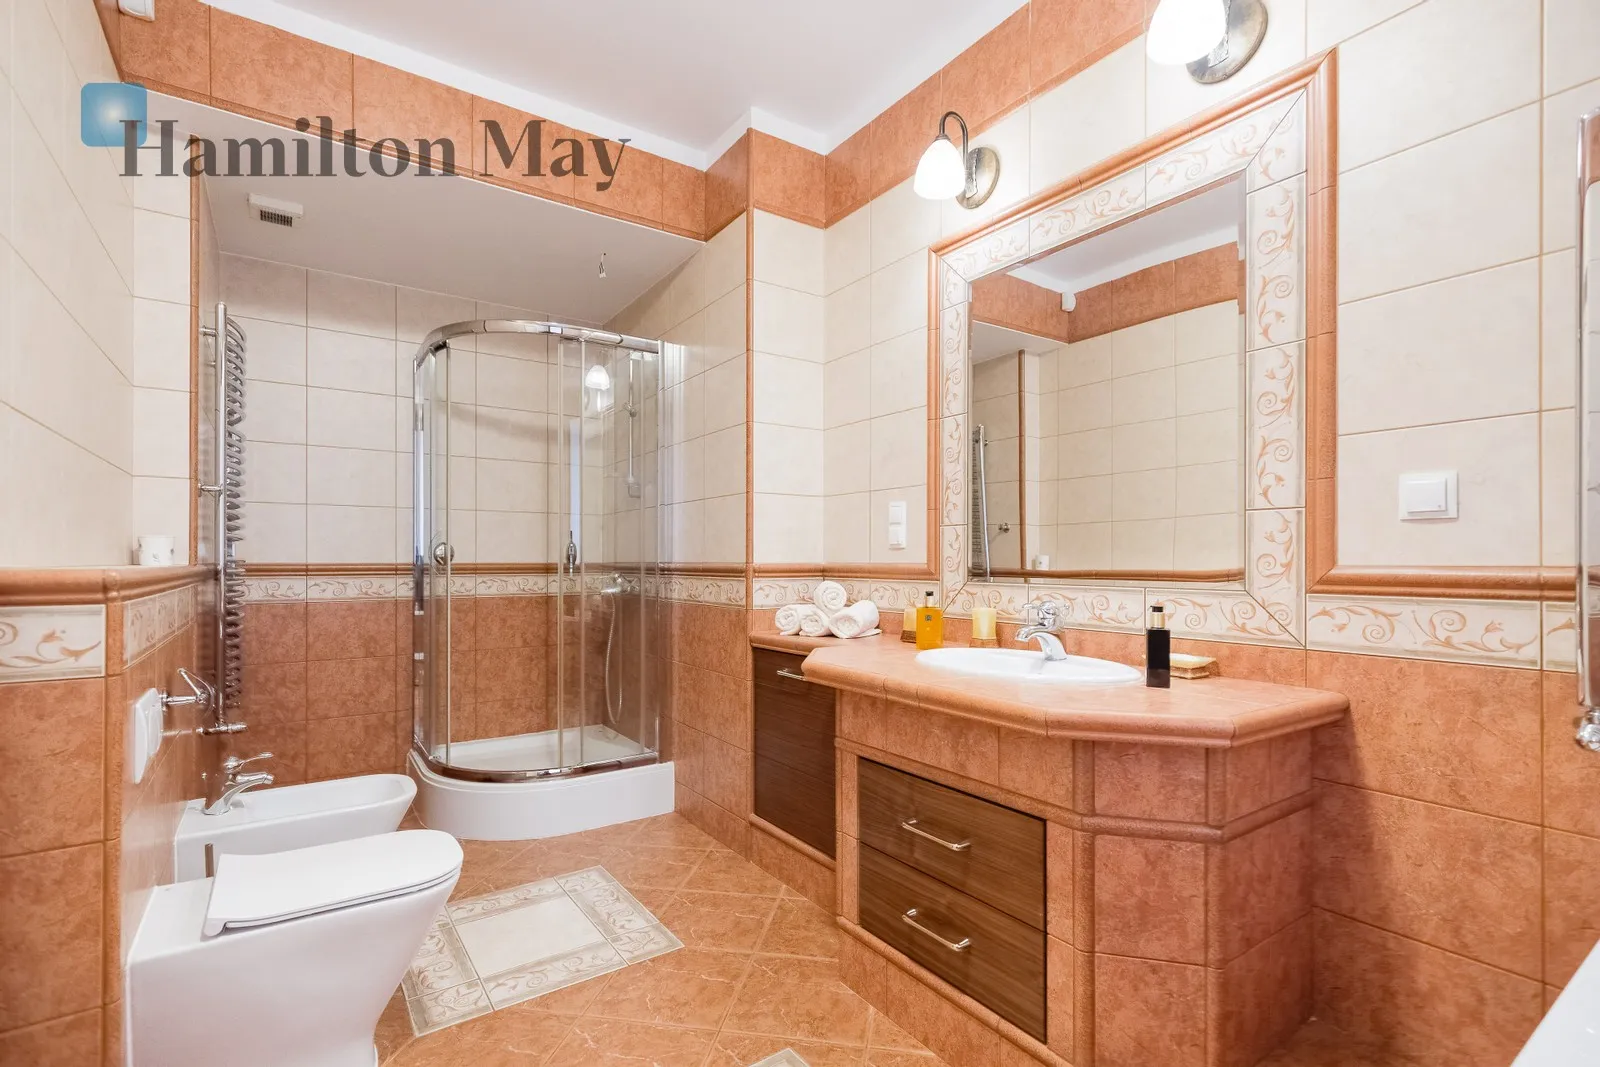 Distance to centre: 4.84 km Price: 4900 PLN Bedrooms: 2 Bathrooms: 2 Size: 90m2 Price/m2: 54 PLN